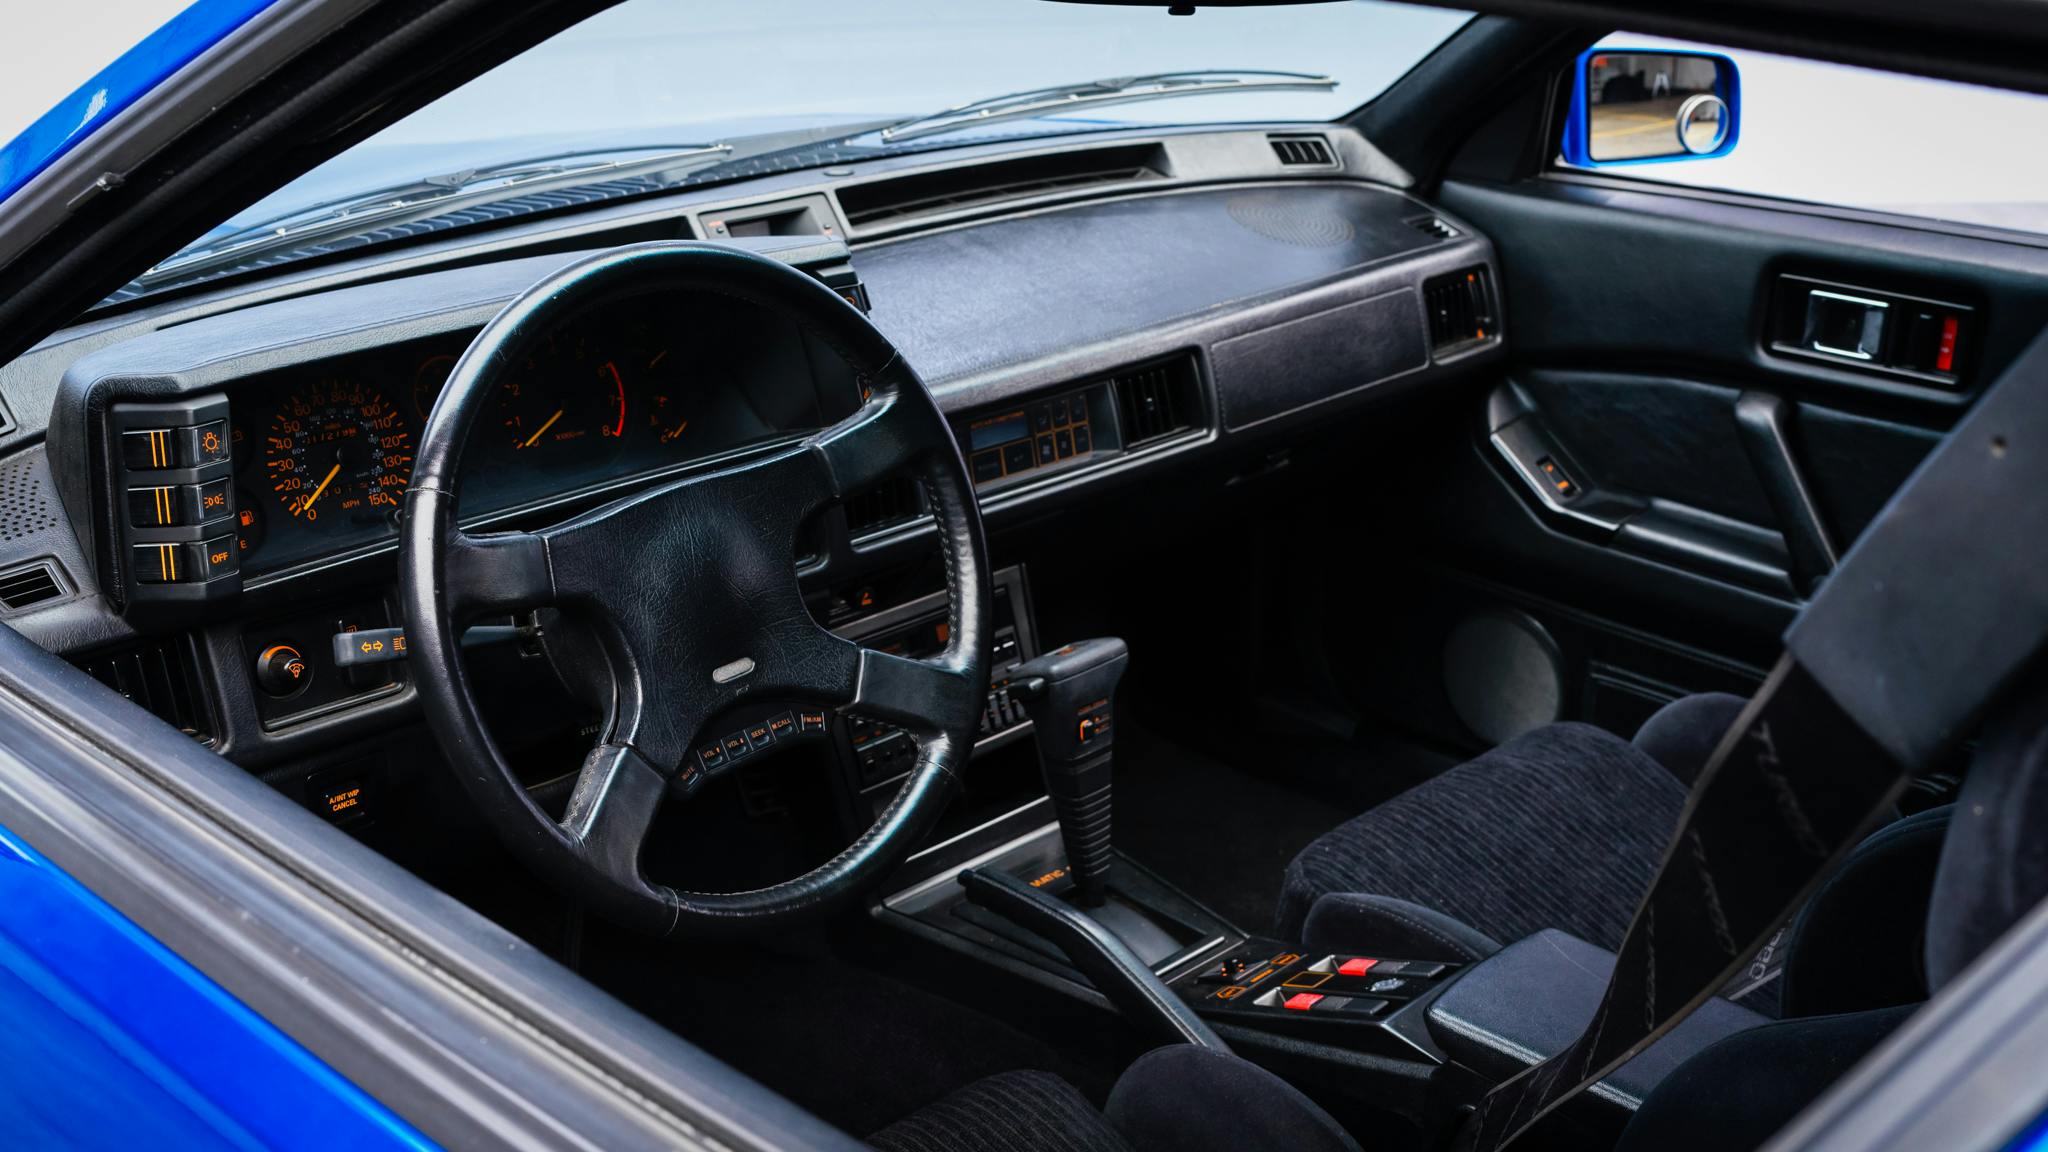 1988 Chrysler Conquest TSi interior